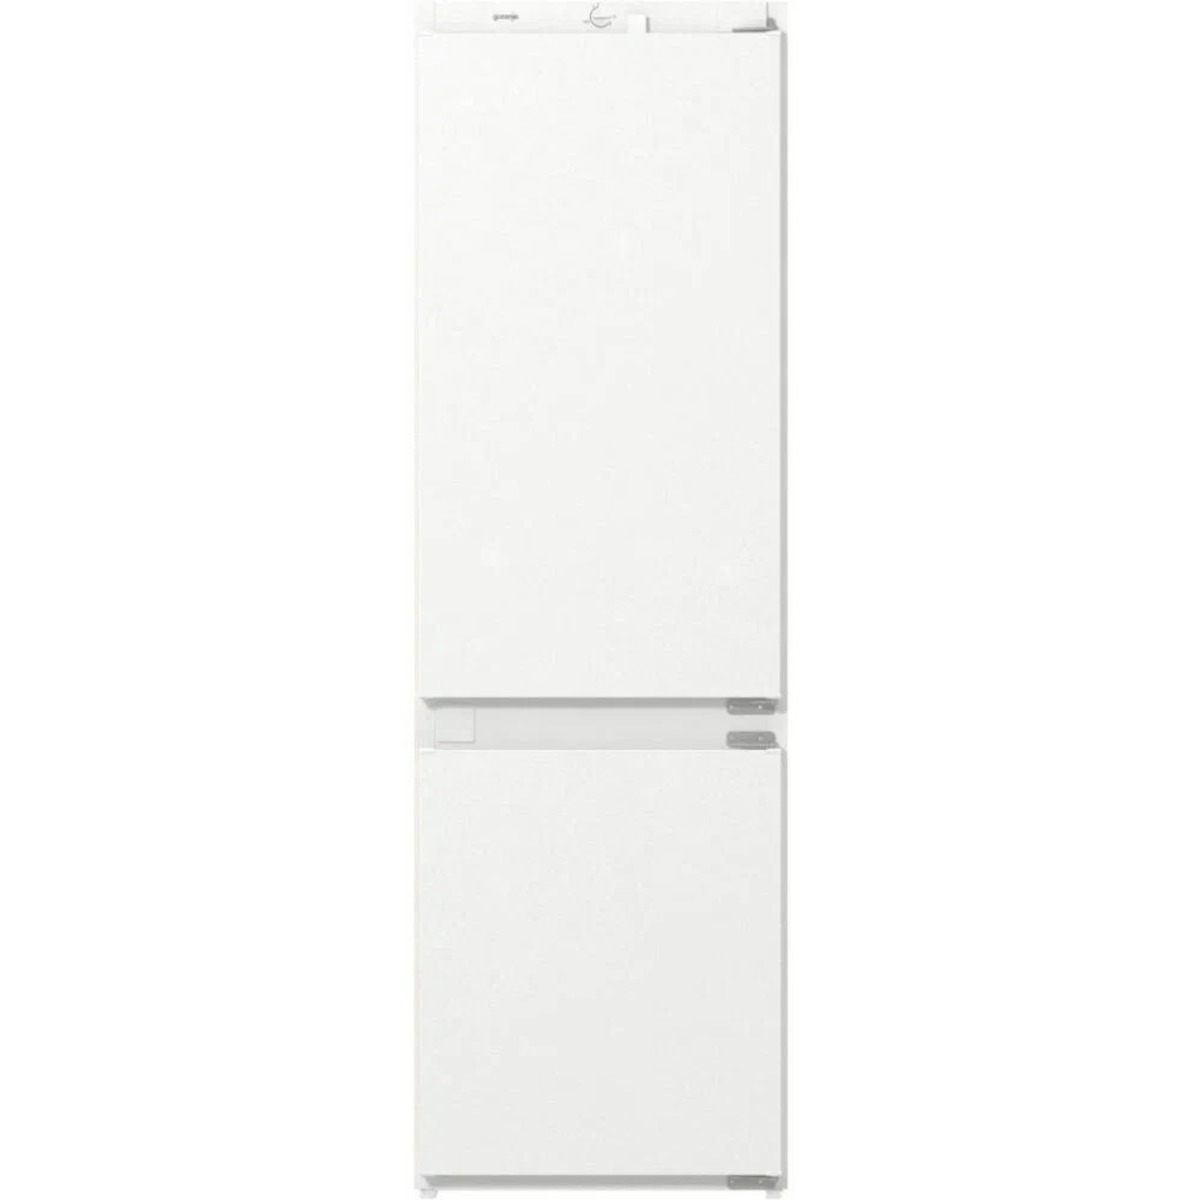 Холодильник Gorenje RKI418FE0, белый